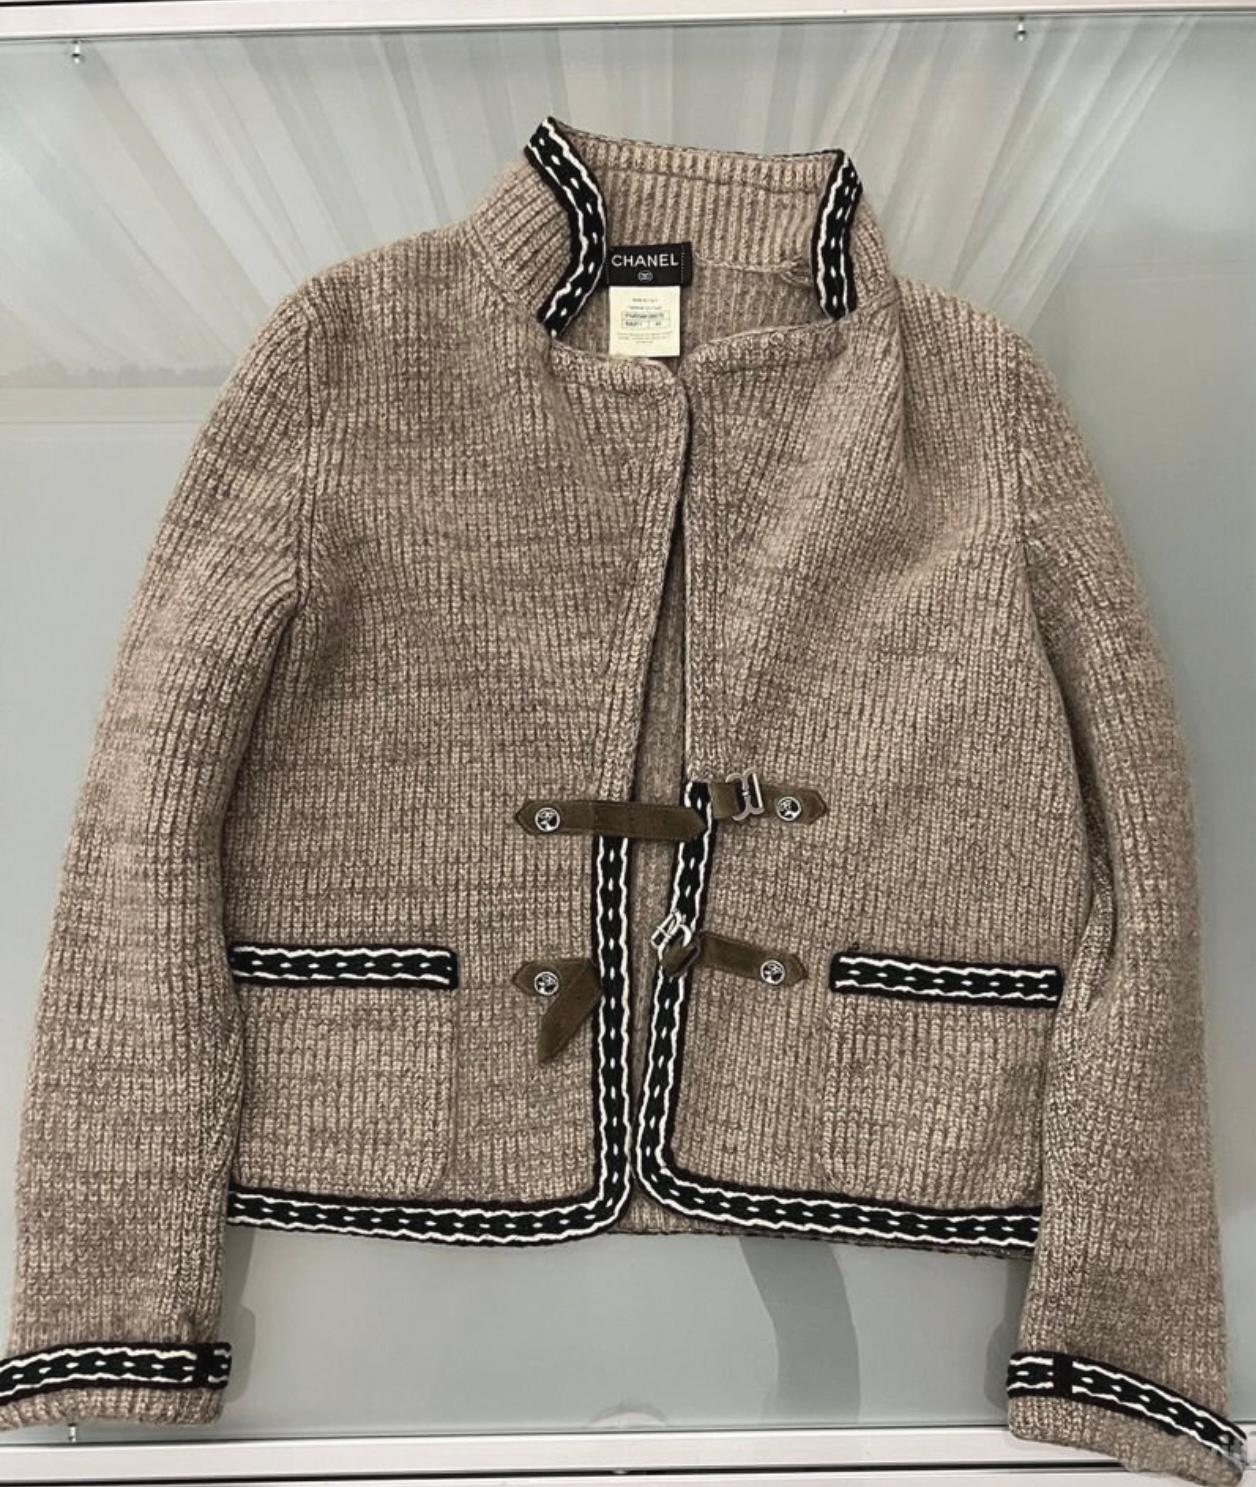 Chanel Paris / Salzburg Runway Cashmere Jacket For Sale 6